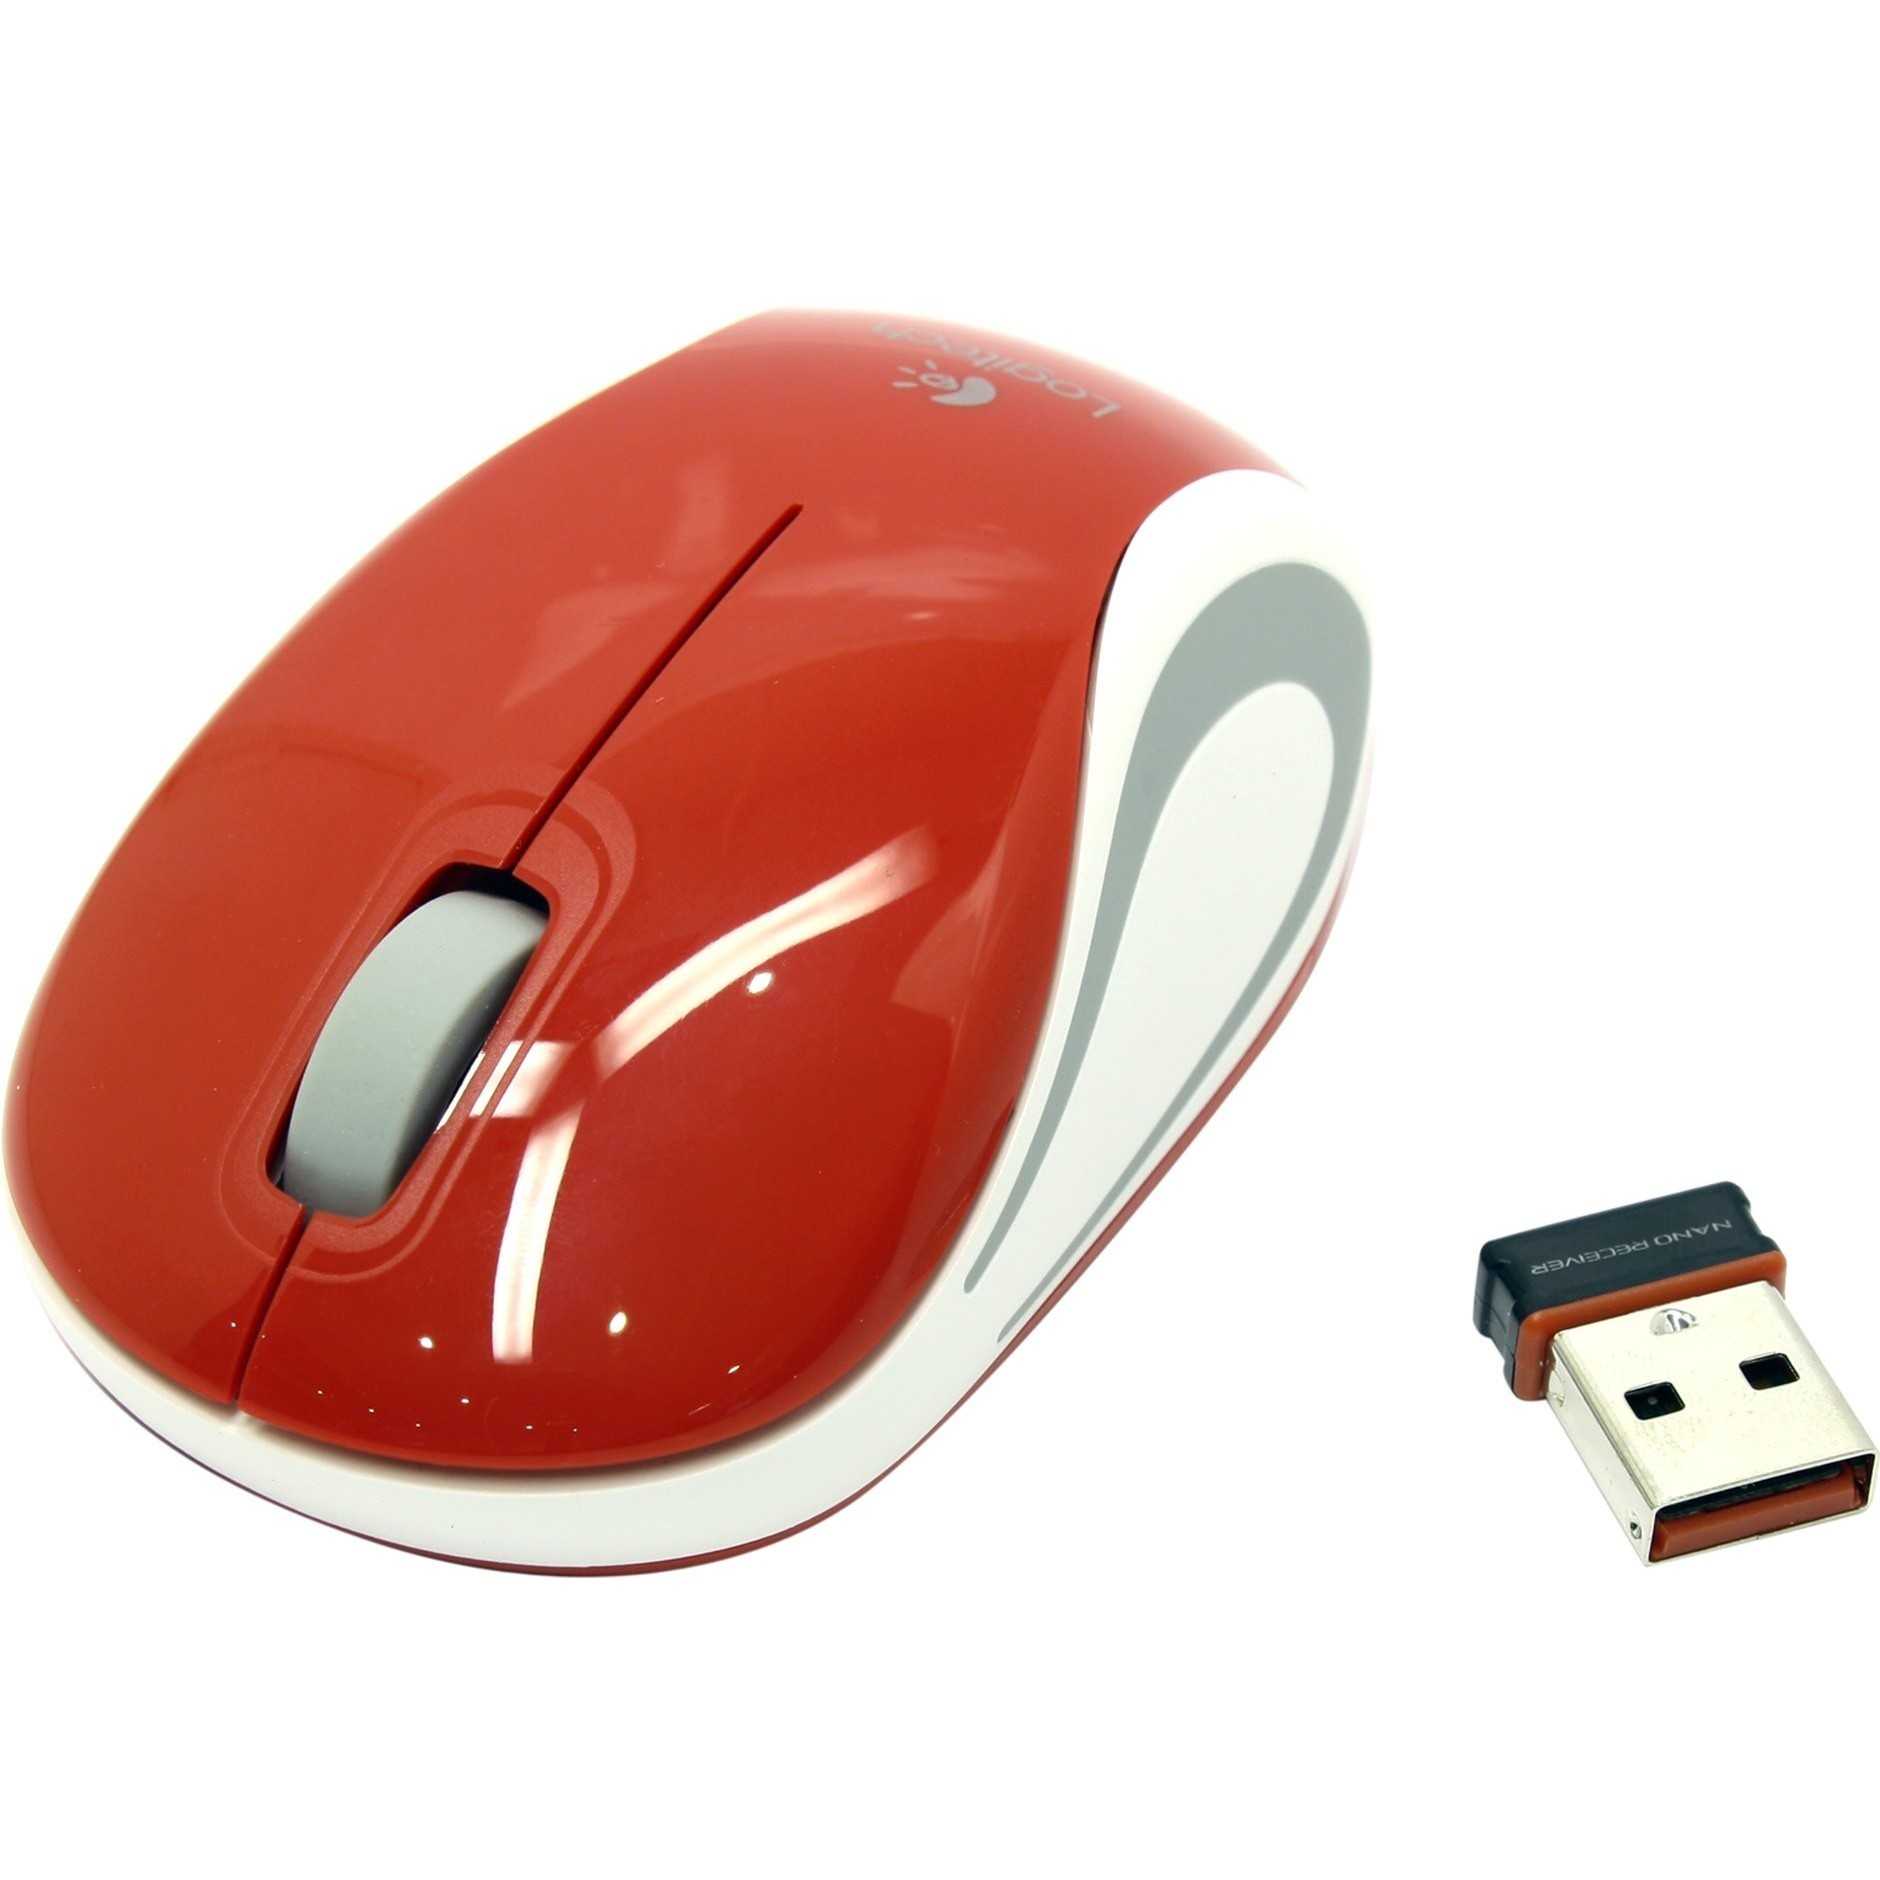 Выбор редакции
					мышь logitech wireless mini mouse m187 (910-002731) black